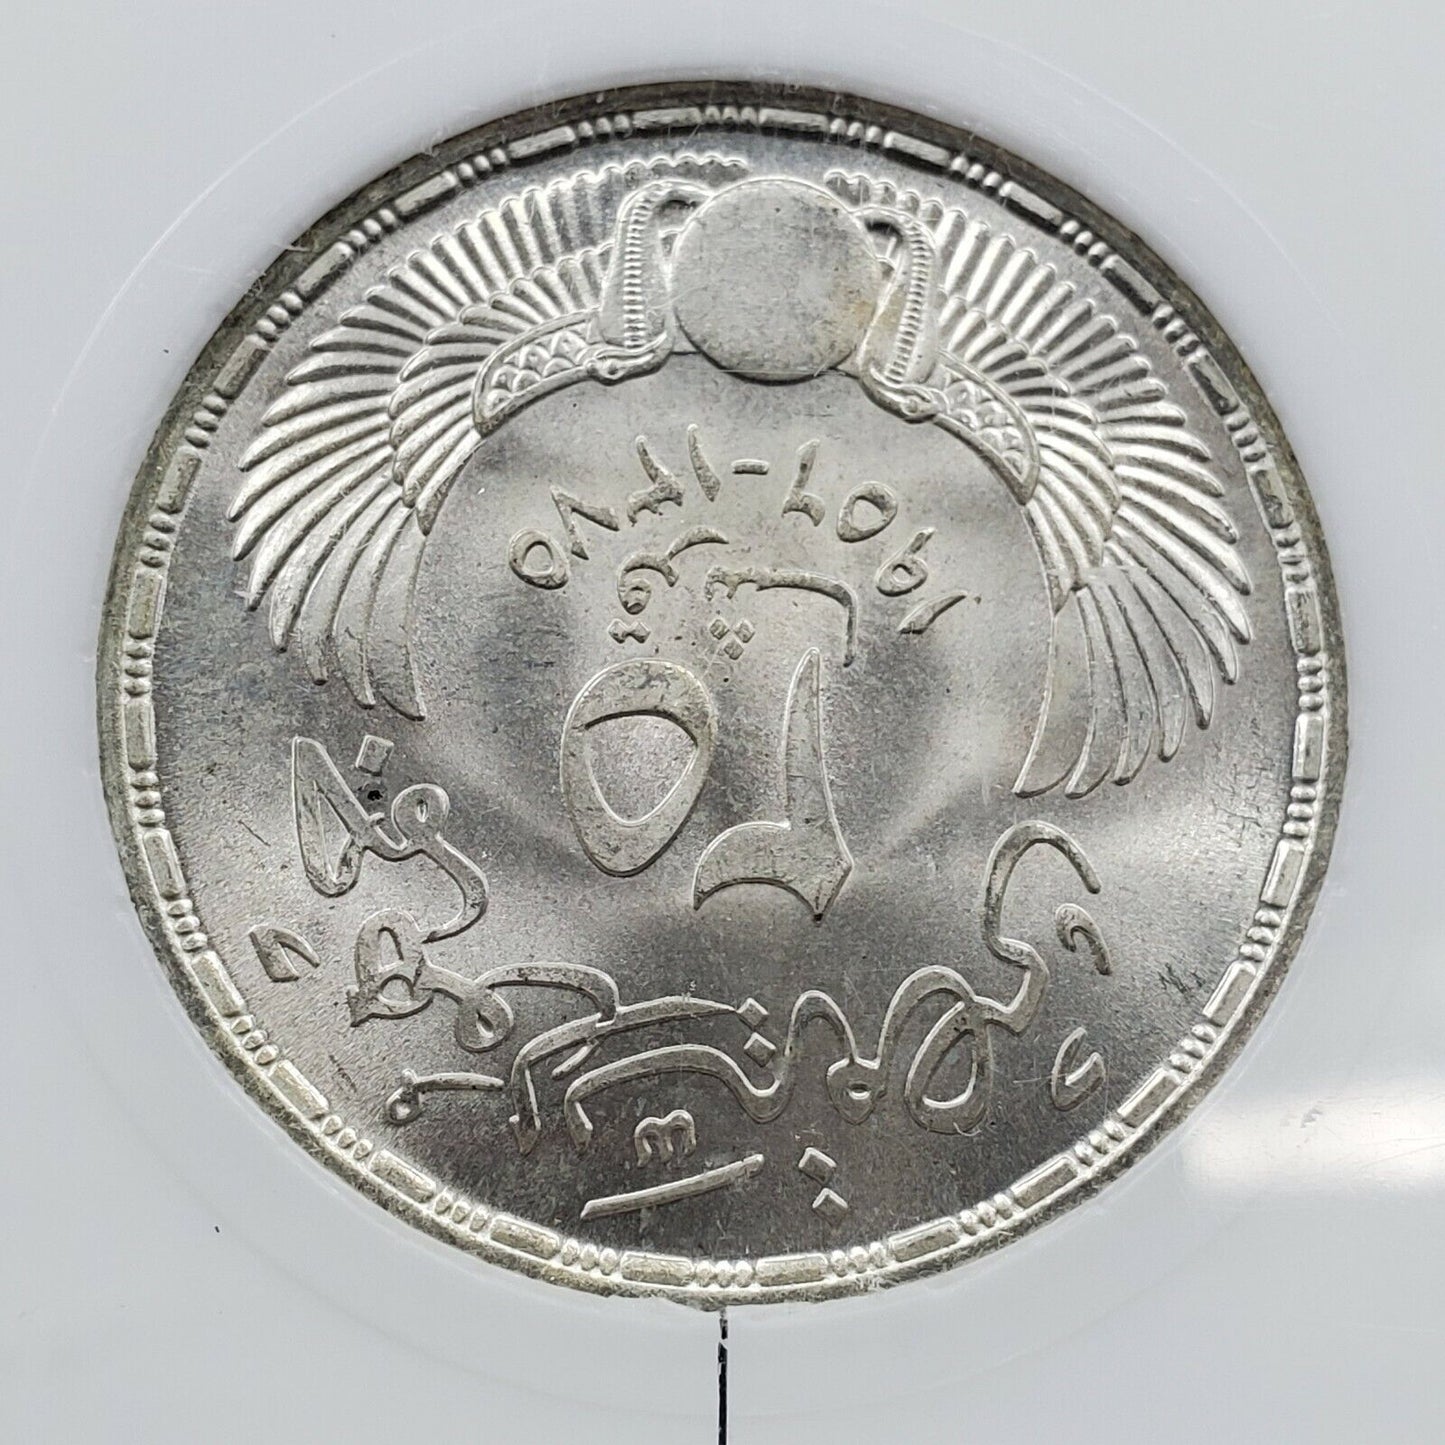 1956 1375 25 Qirsh Piastres Silver Coin Egypt Suez Canal PCI Slab Gem BU Grade